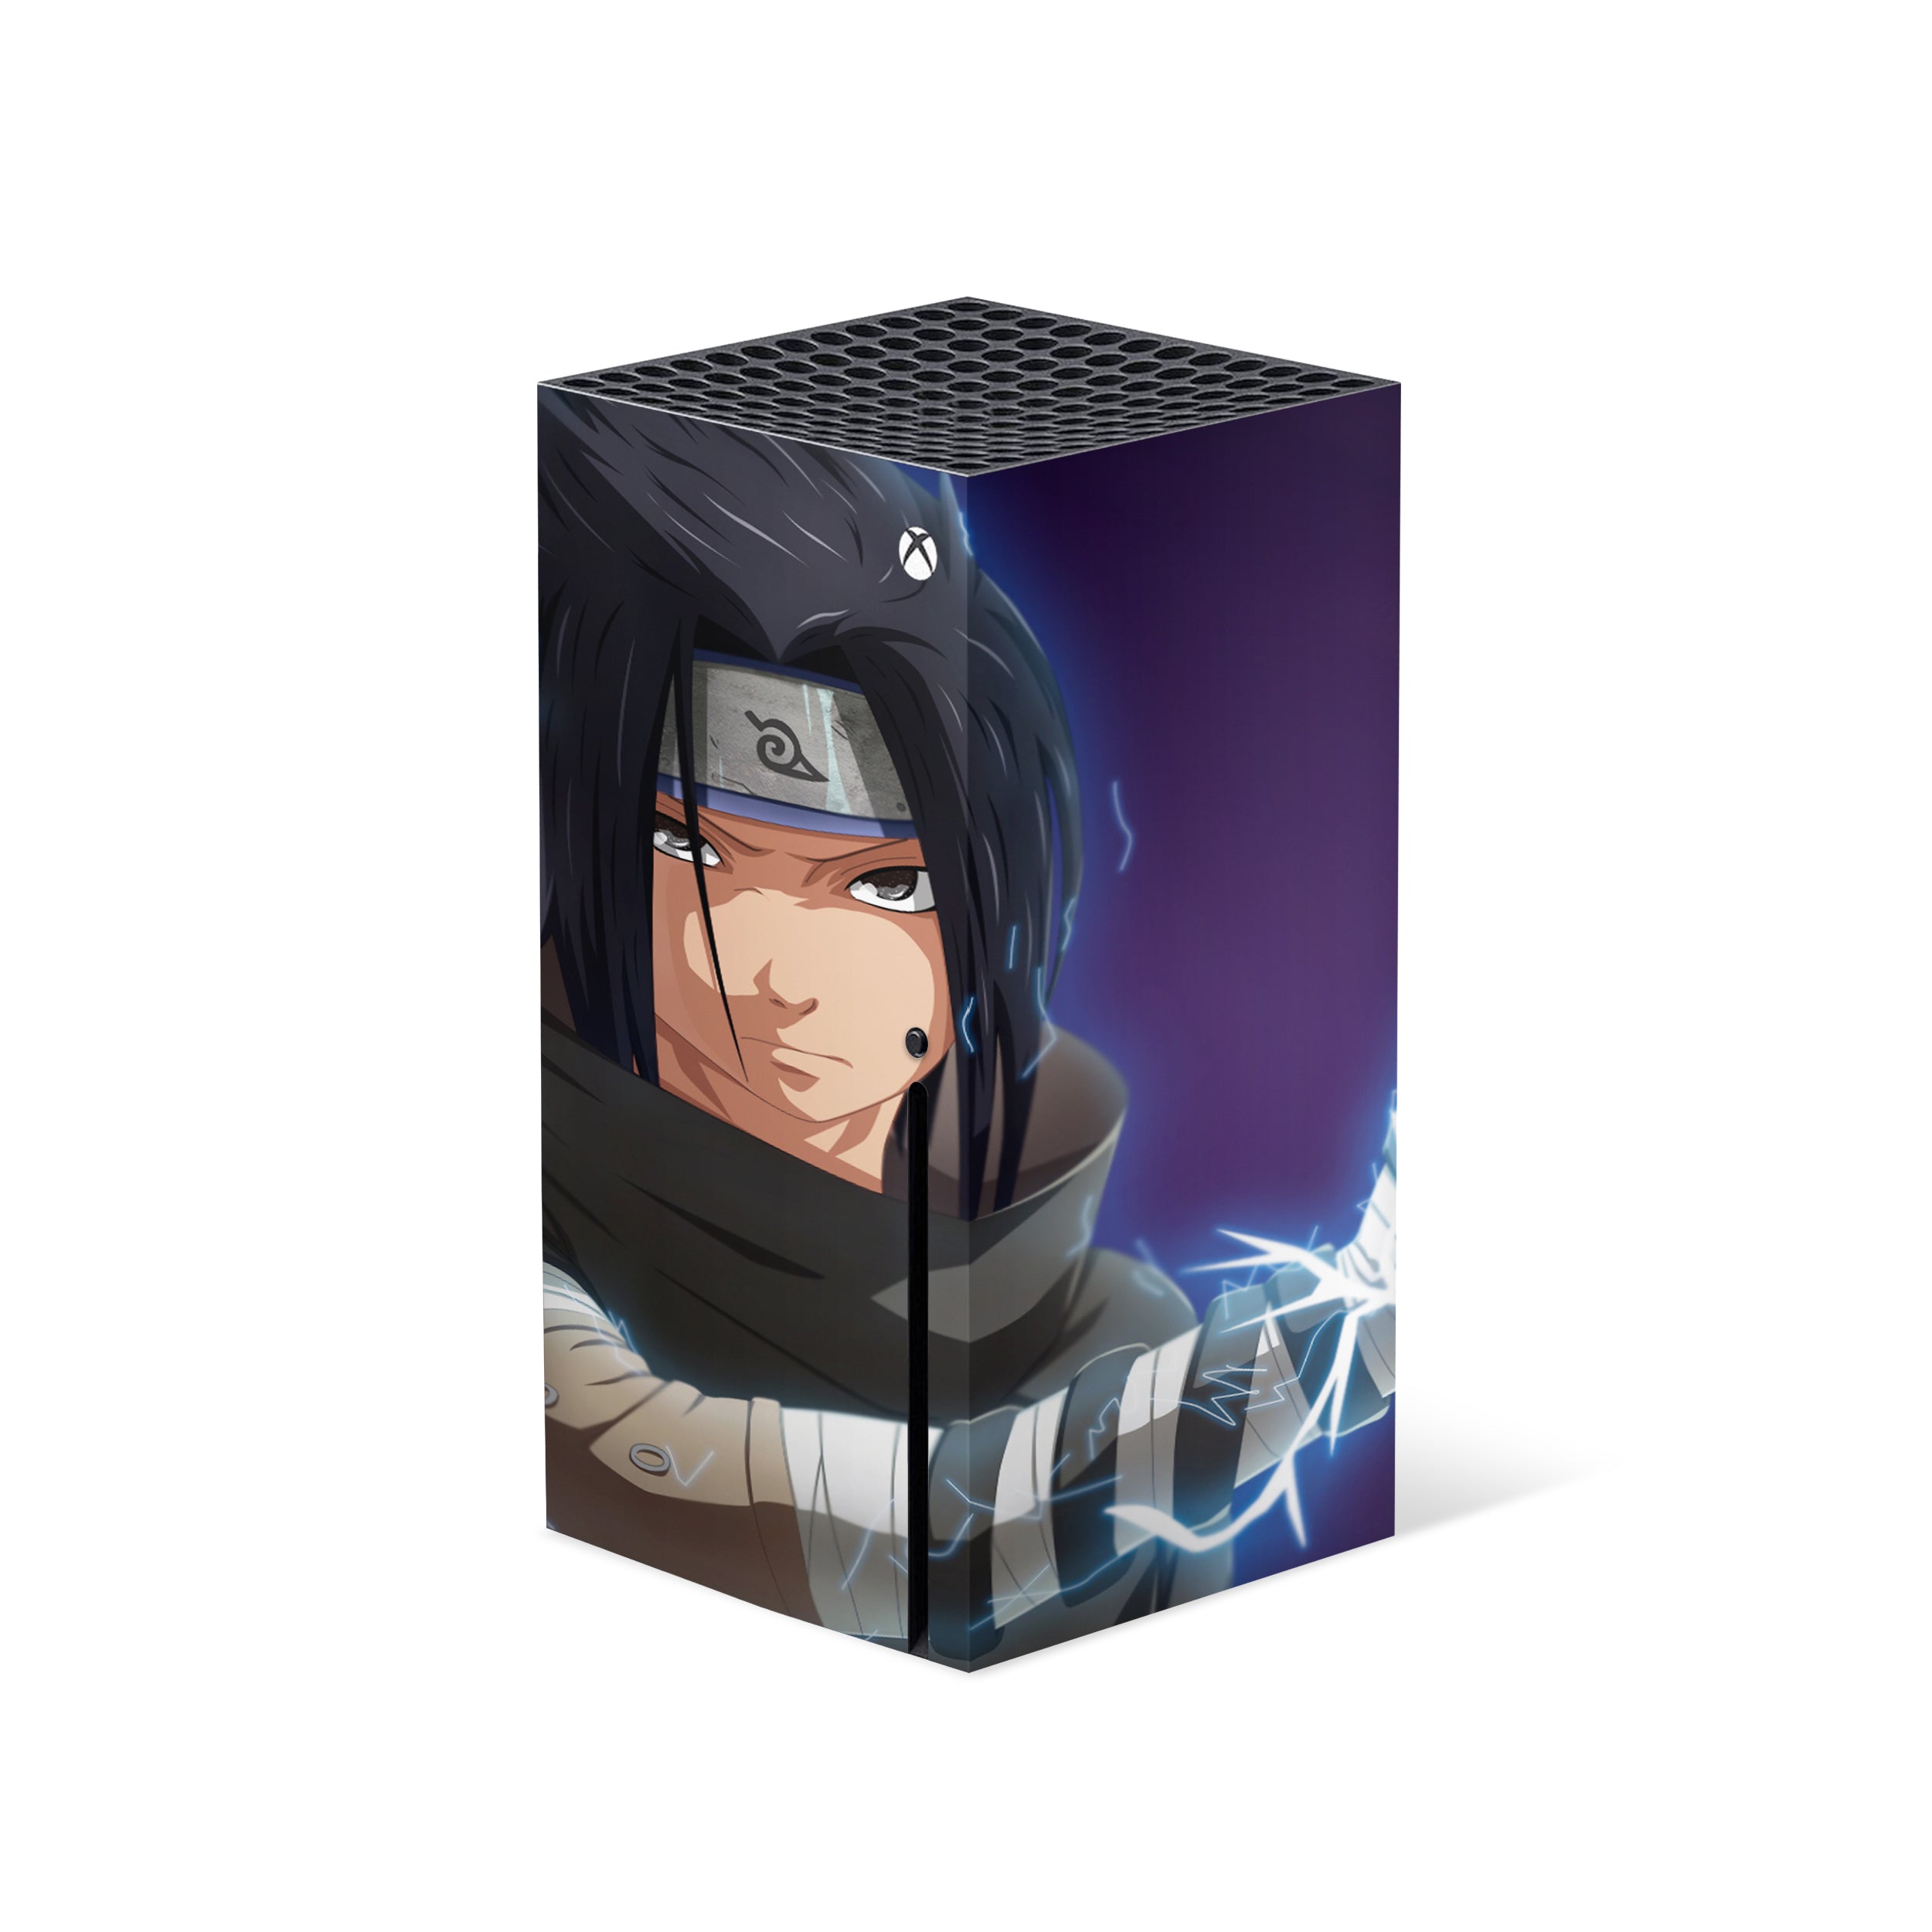 A video game skin featuring a Naruto Sasuke design for the Xbox Series X.